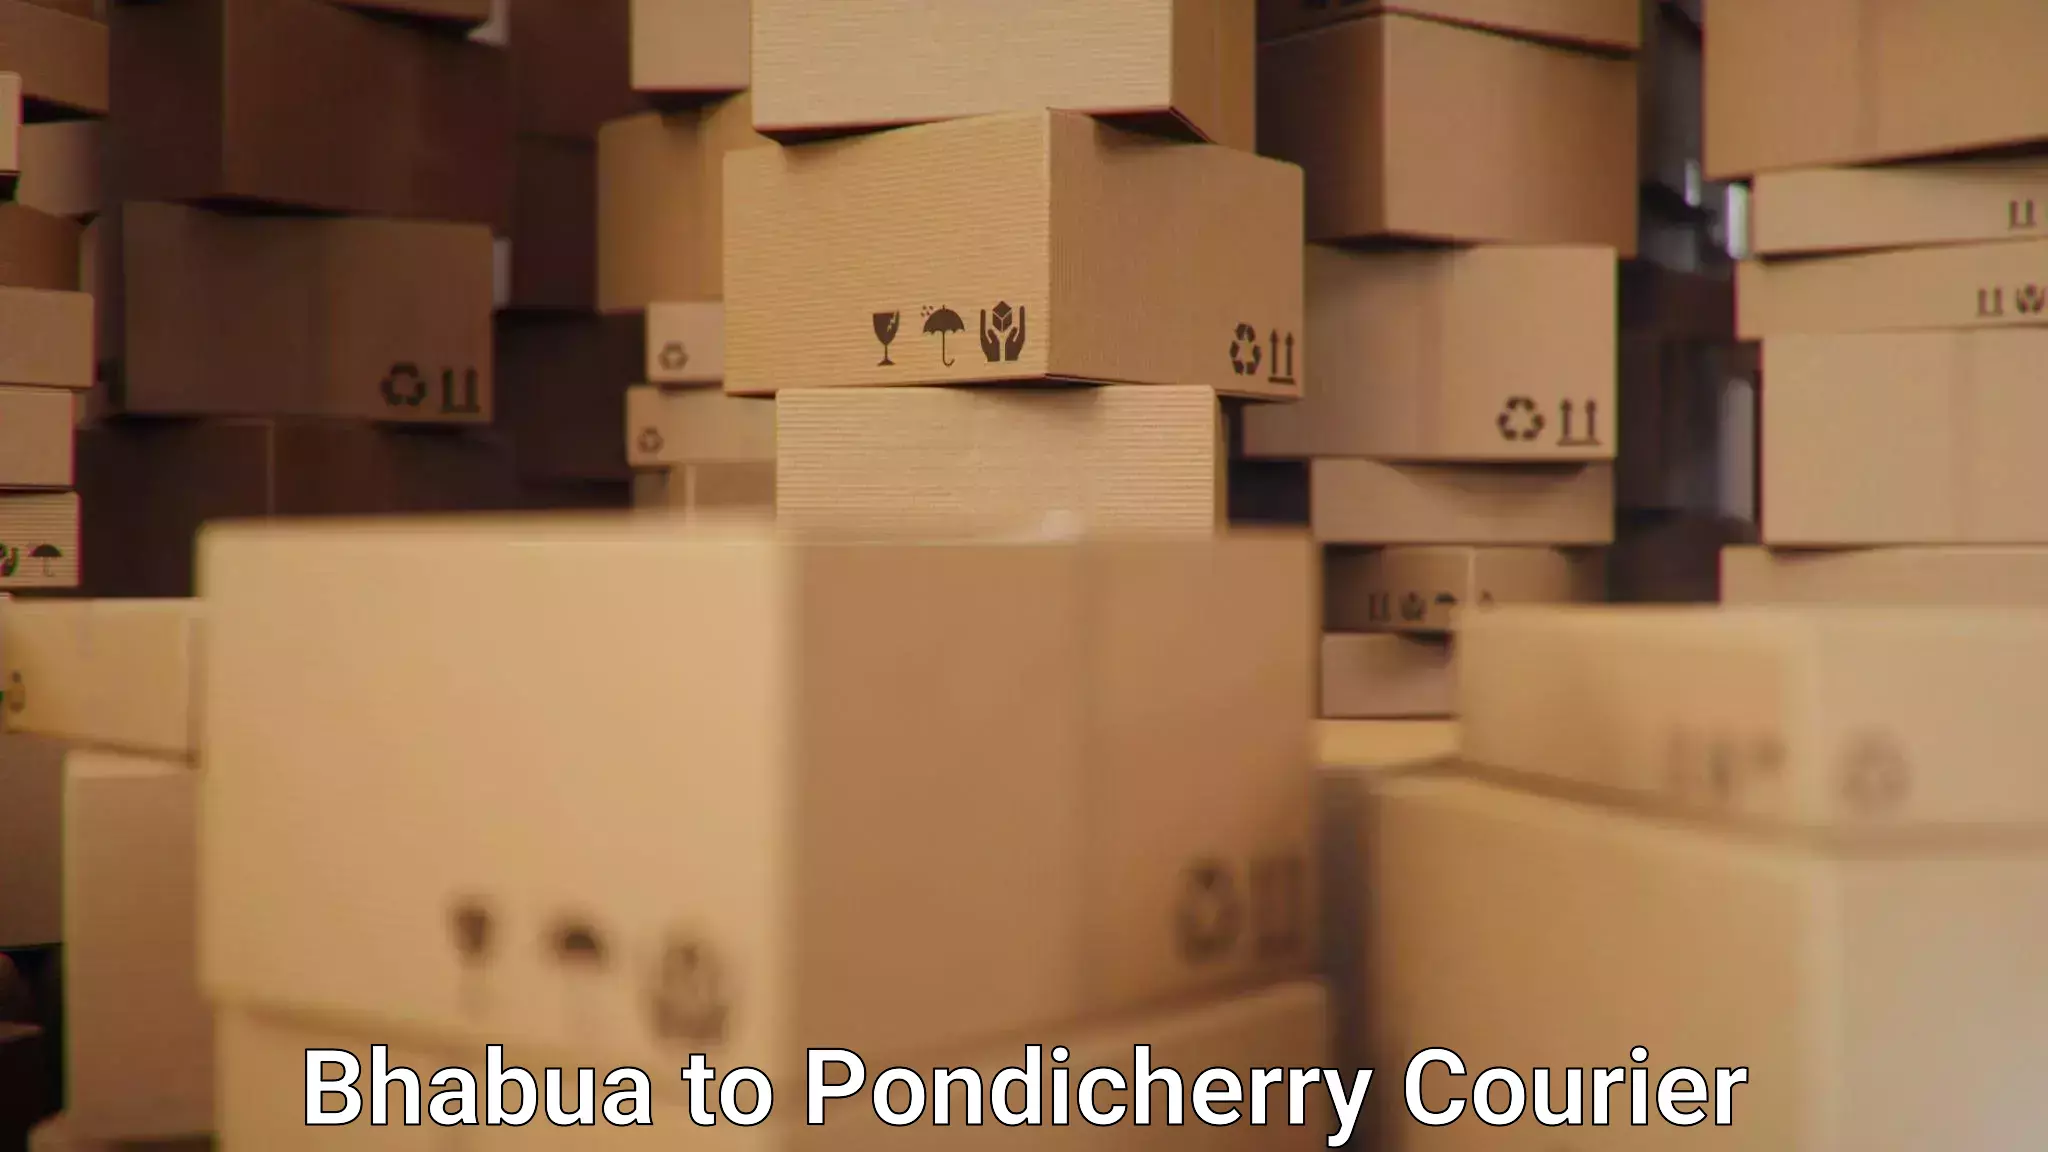 Courier service booking Bhabua to Pondicherry